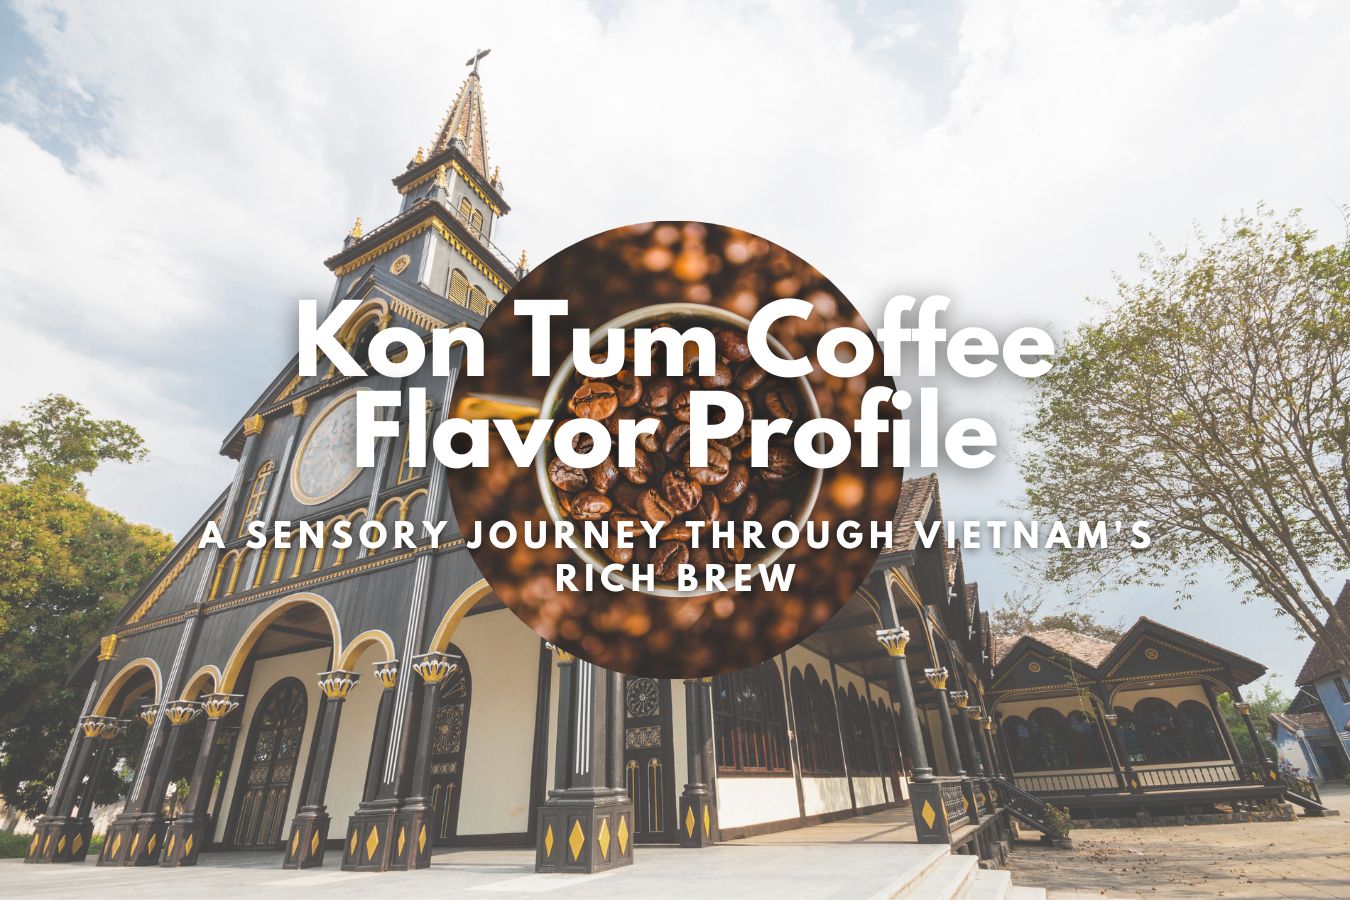 Kon Tum Coffee Flavor Profile A Sensory Journey Through Vietnam's Rich Brew